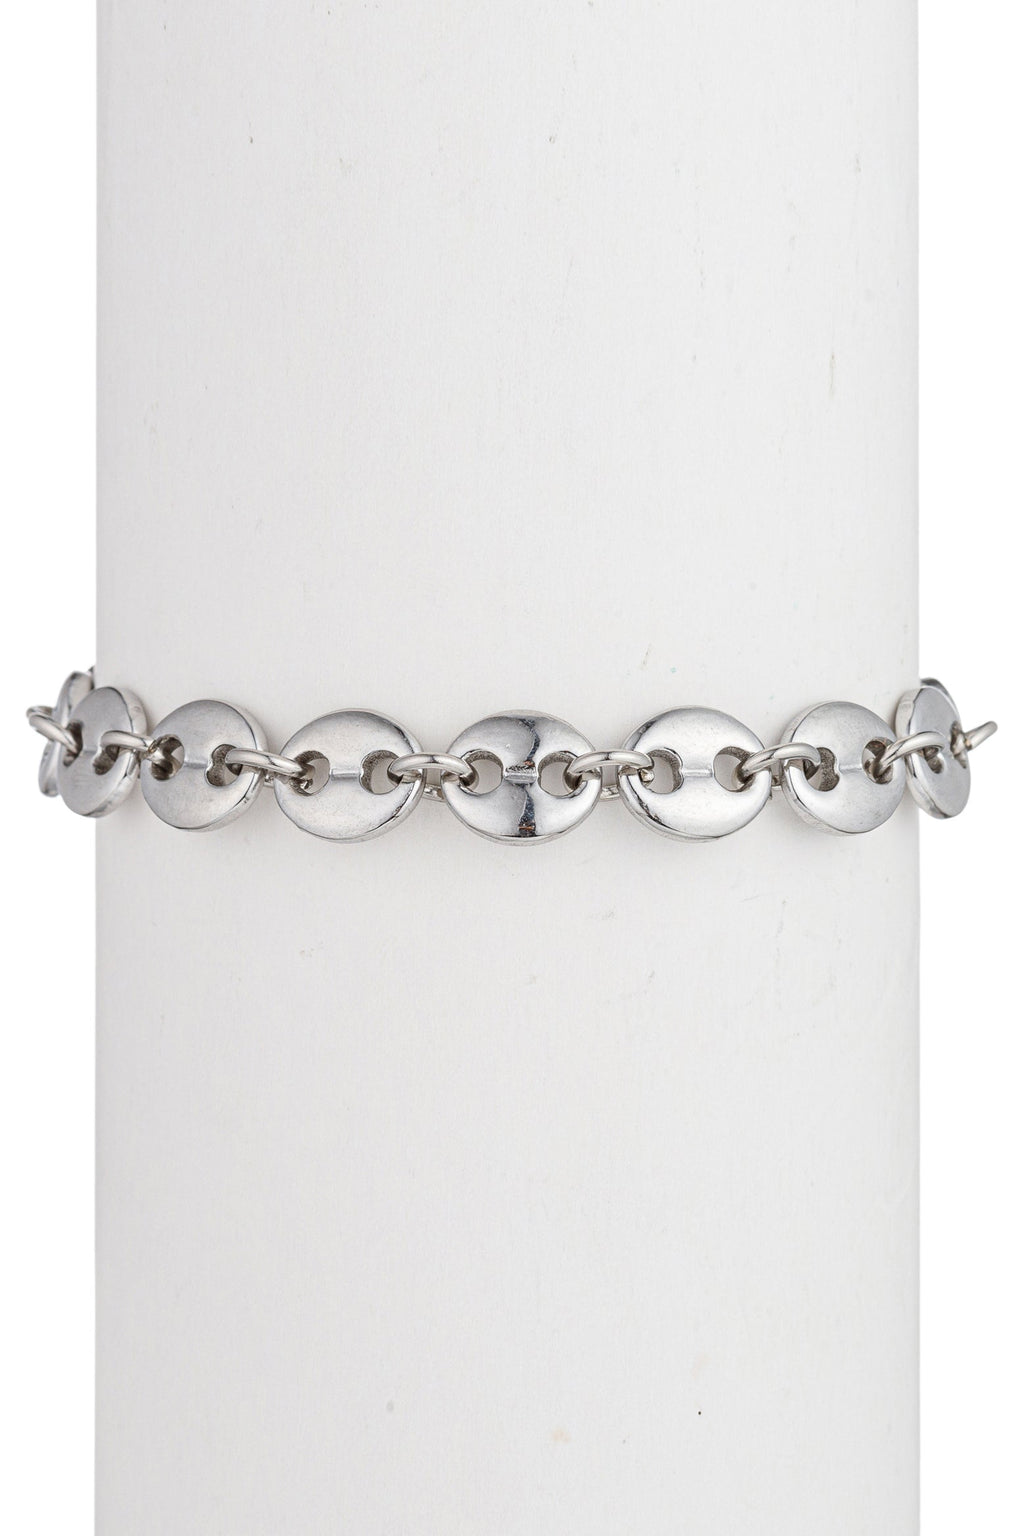 Adrian Mariner Chain Link Adjustable Bracelet: Nautical Style Meets Versatility.